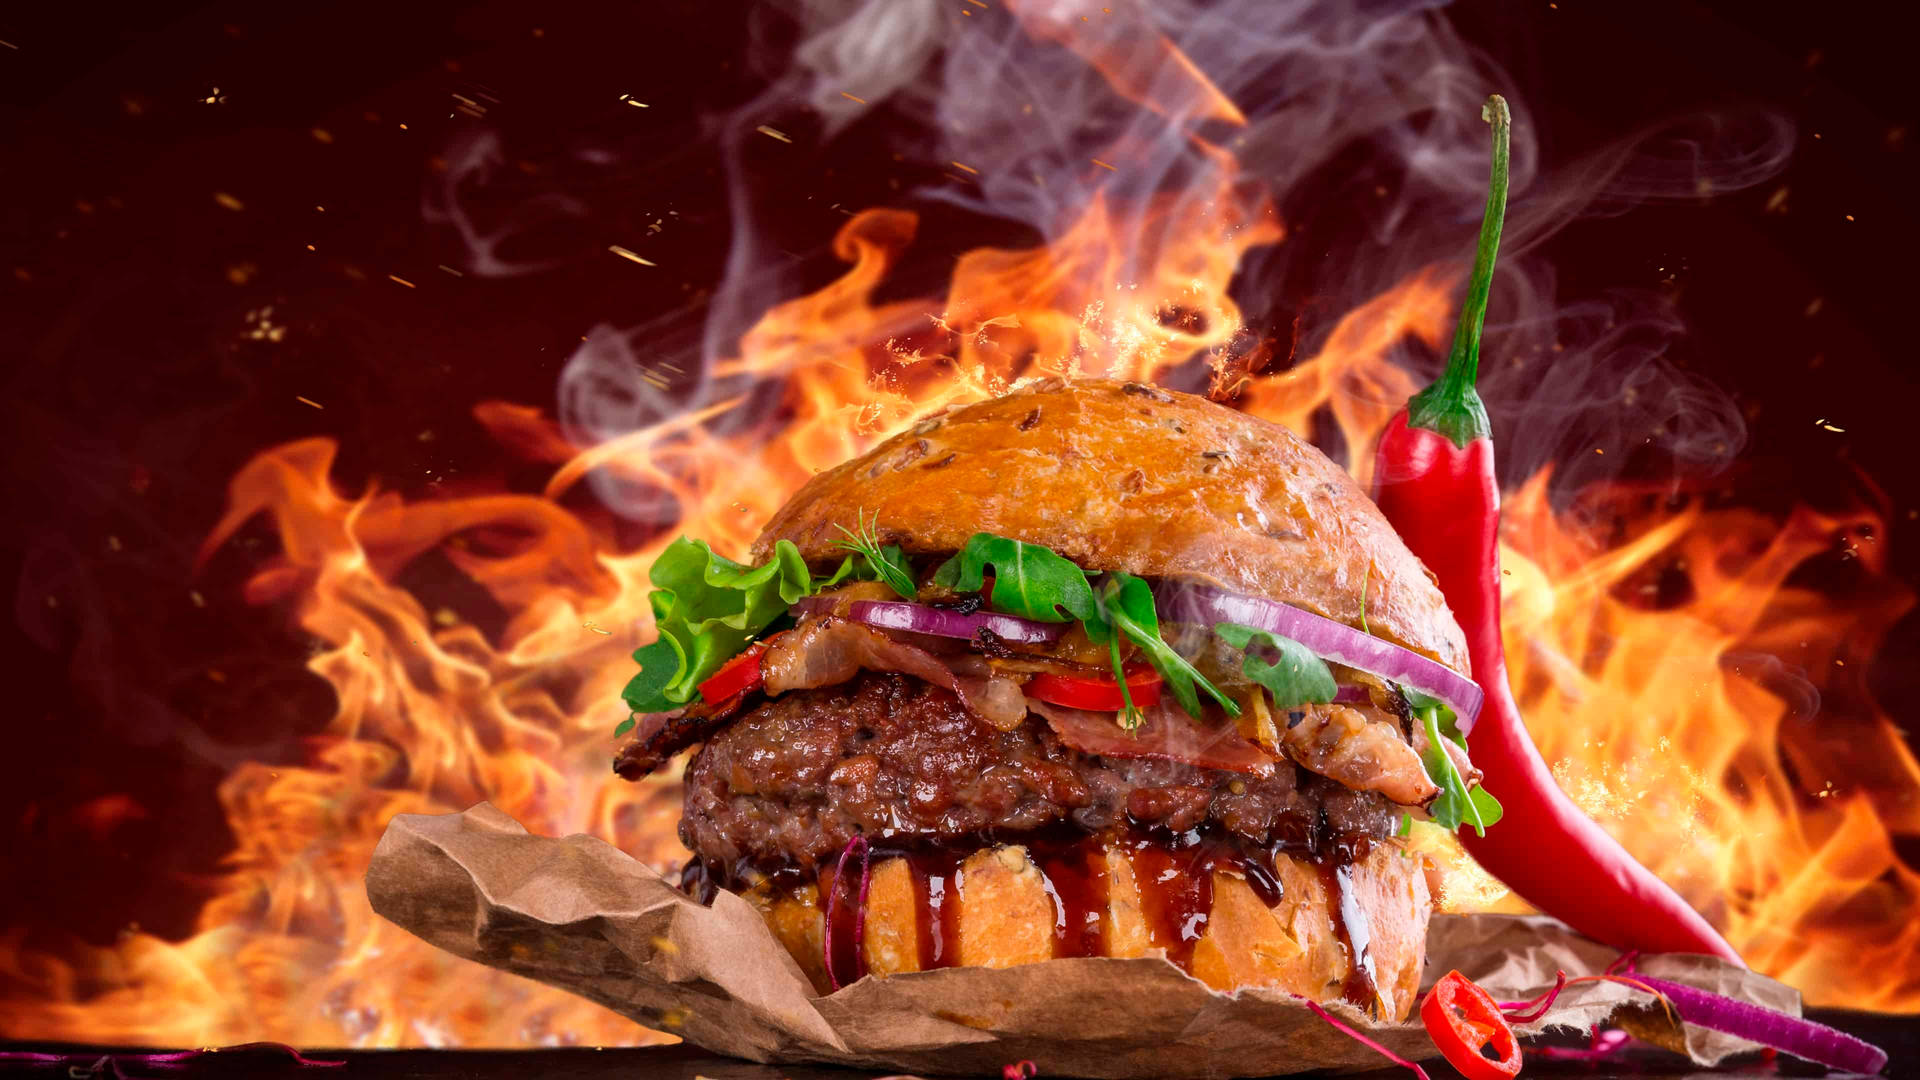 Burgerking Flamed Burger - Burger King Flamed Burger Wallpaper